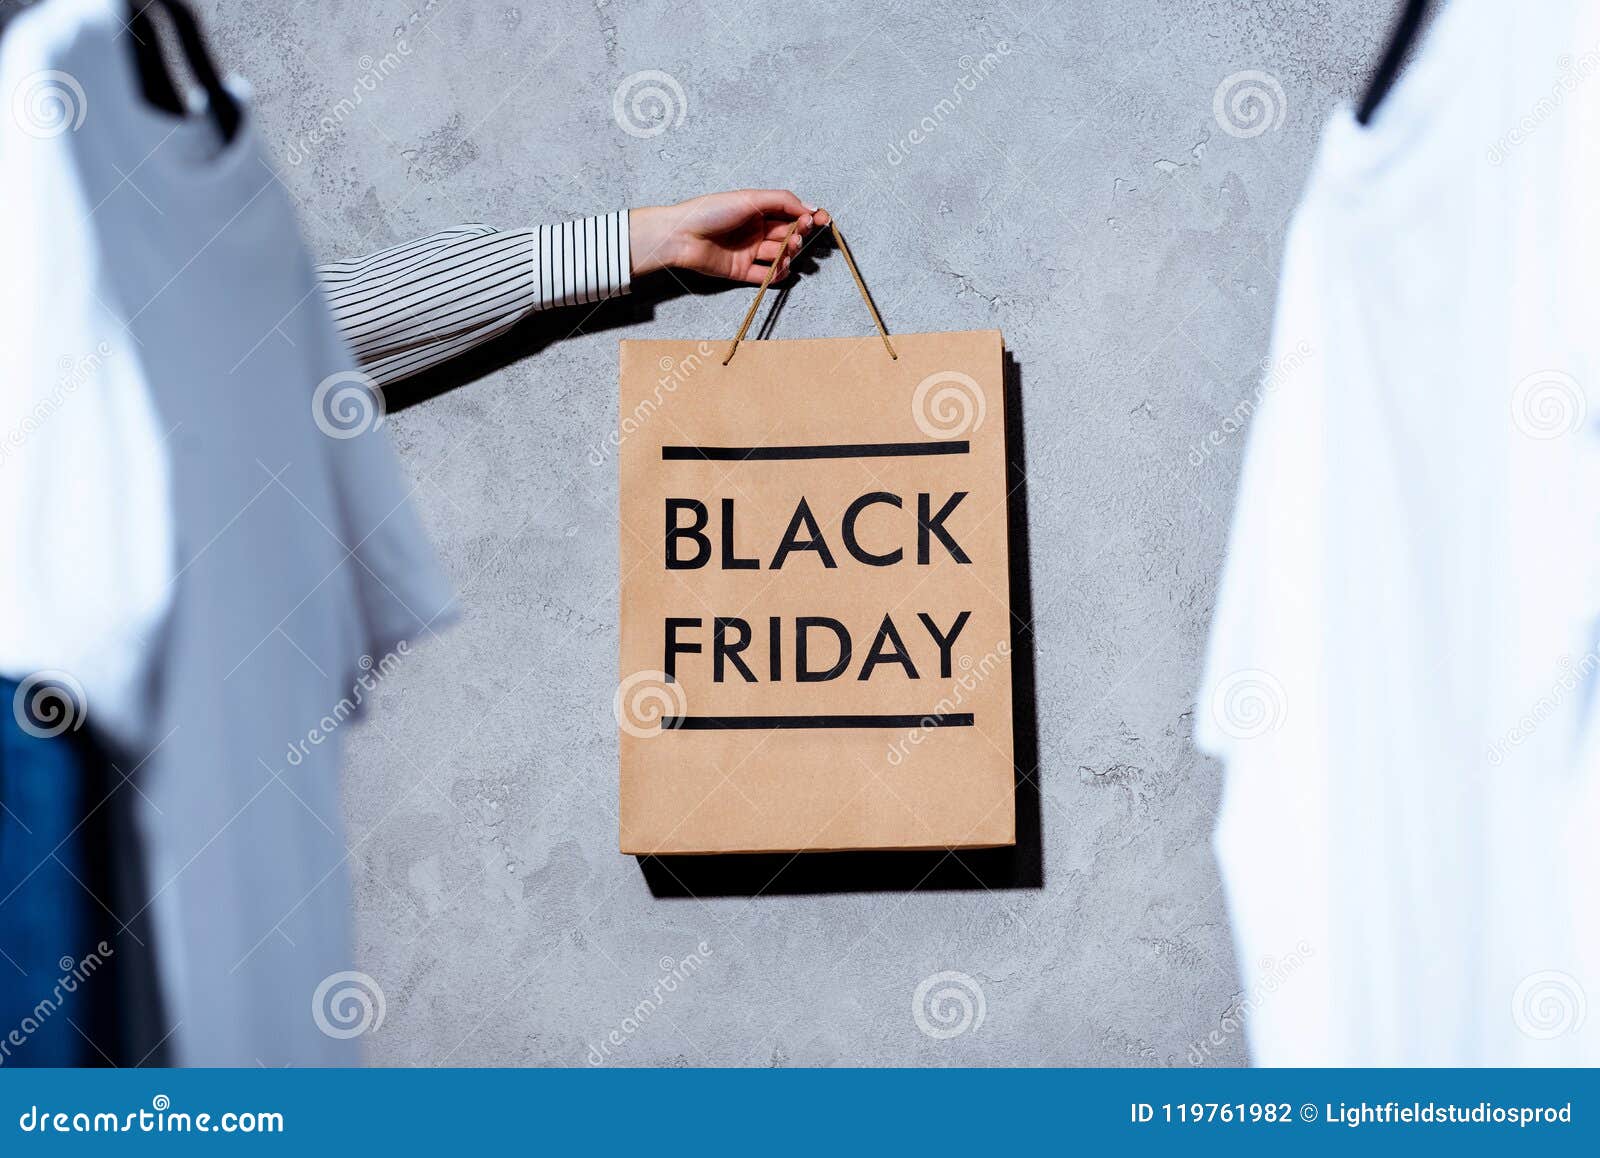 Black friday shopping bag stock photo. Image of sale - 119761982